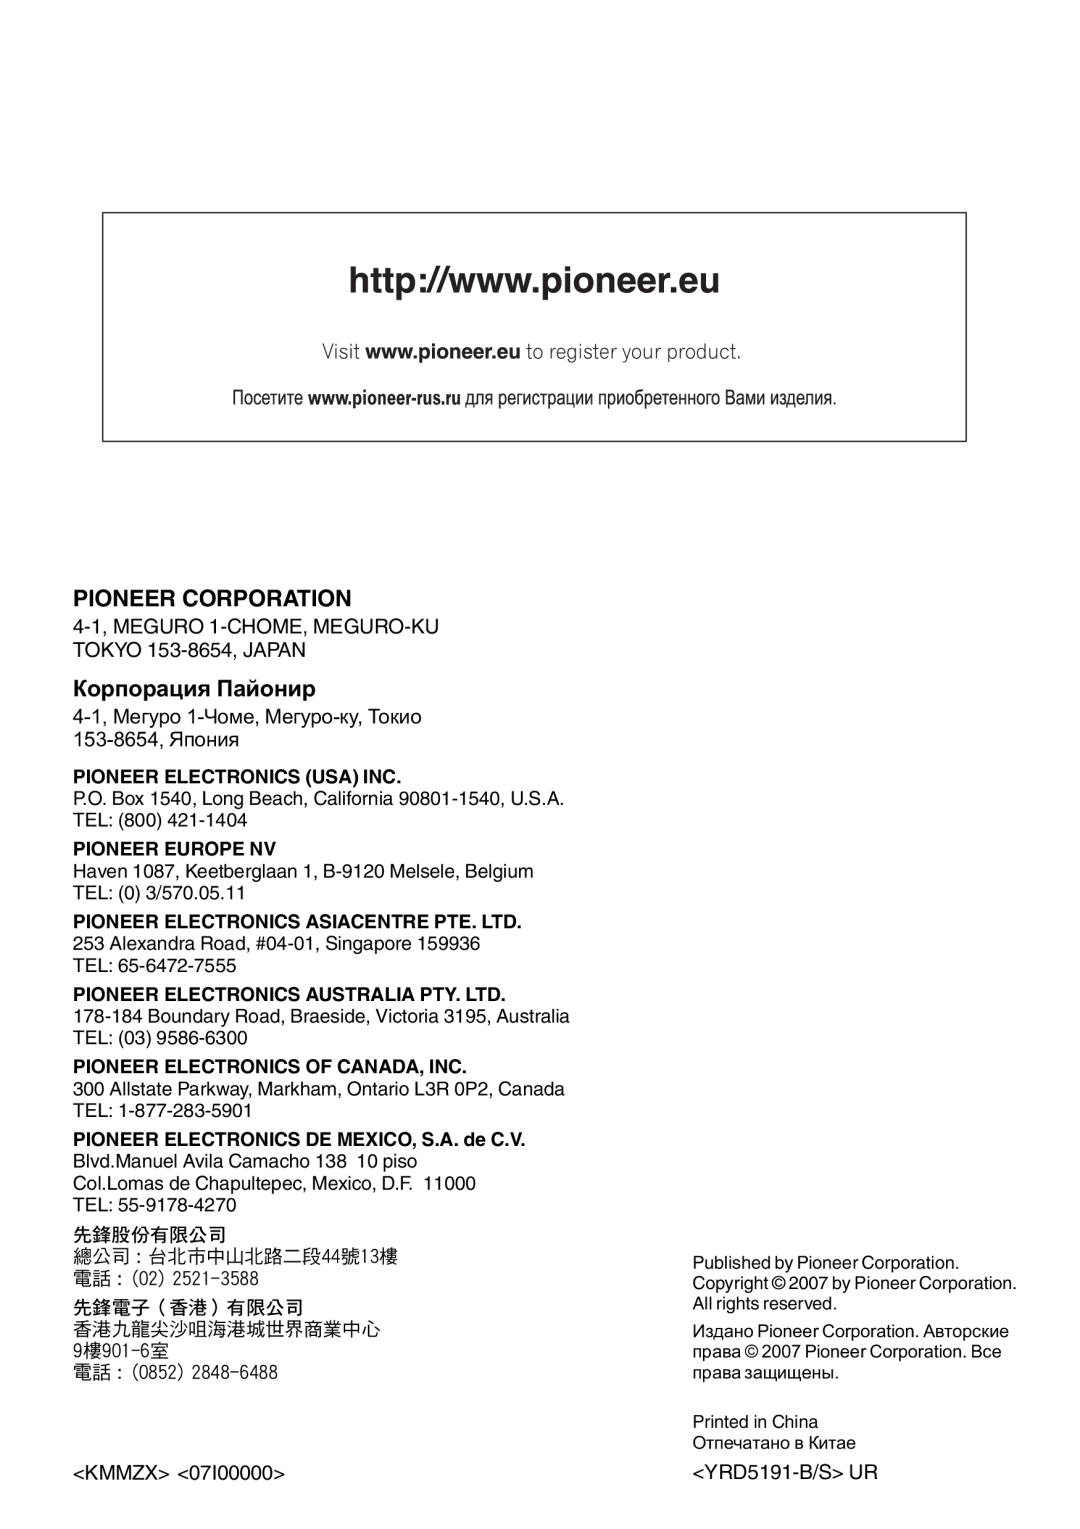 Pioneer DEH-200MP Pioneer Corporation, Корпорация Пайонир, 4-1,MEGURO 1-CHOME, MEGURO-KUTOKYO 153-8654,JAPAN, Kmmzx 